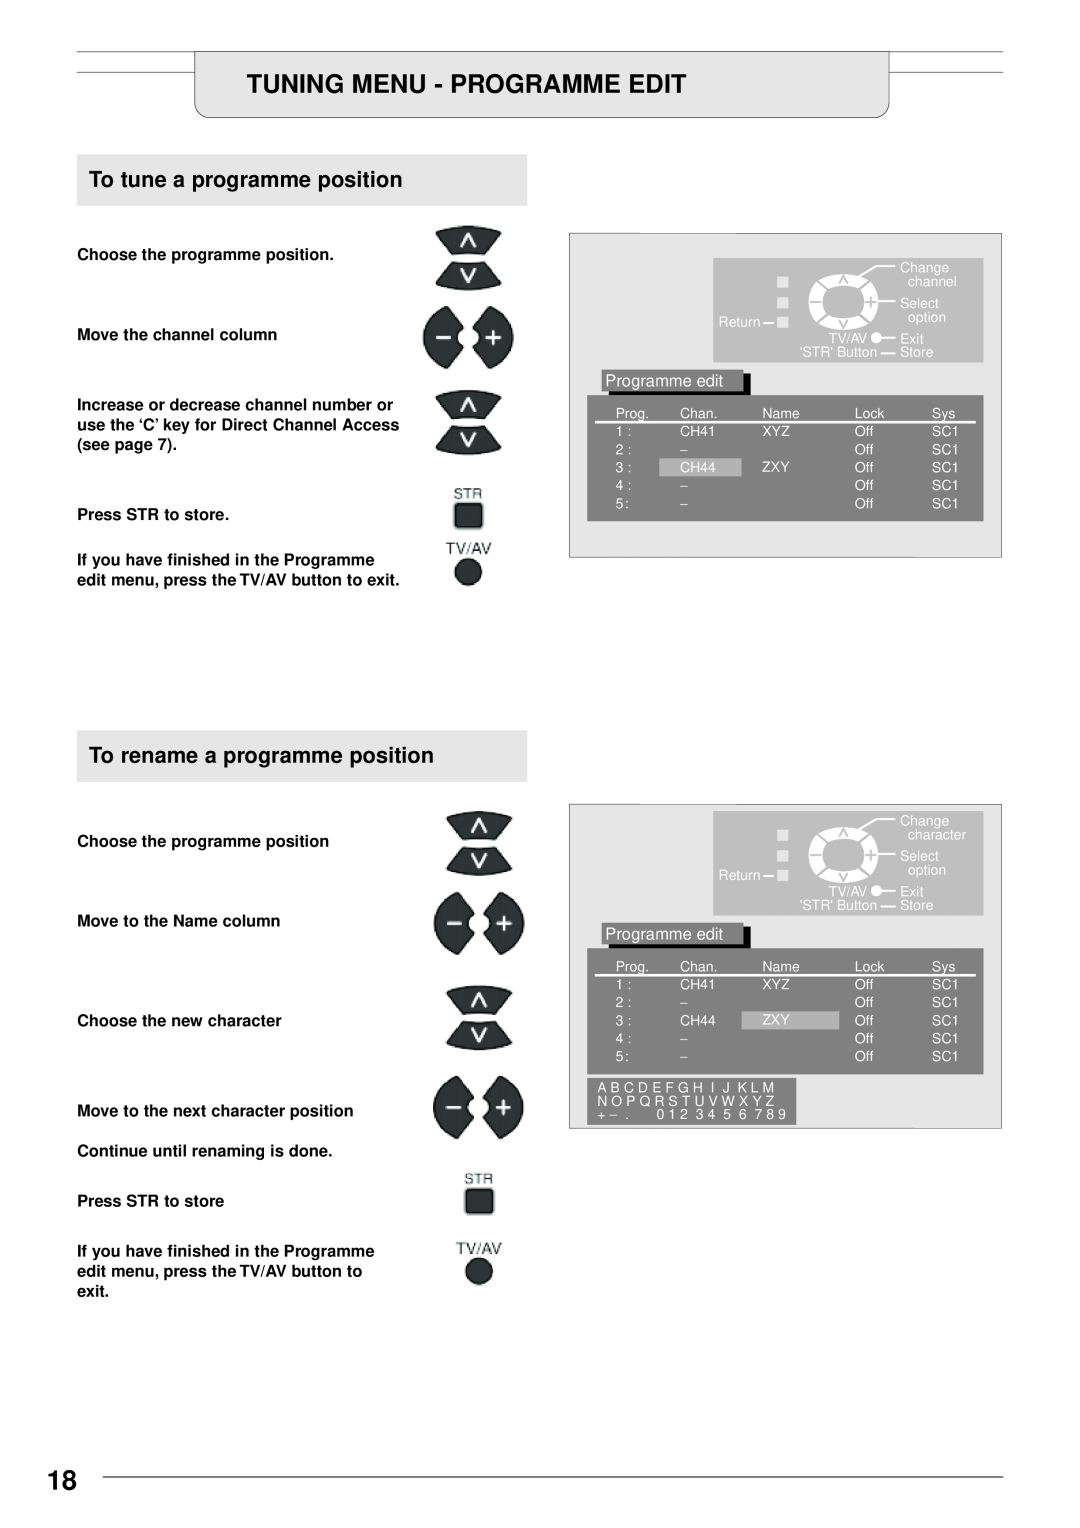 Panasonic TU-PTA100E manual To tune a programme position, To rename a programme position, Tuning Menu - Programme Edit 